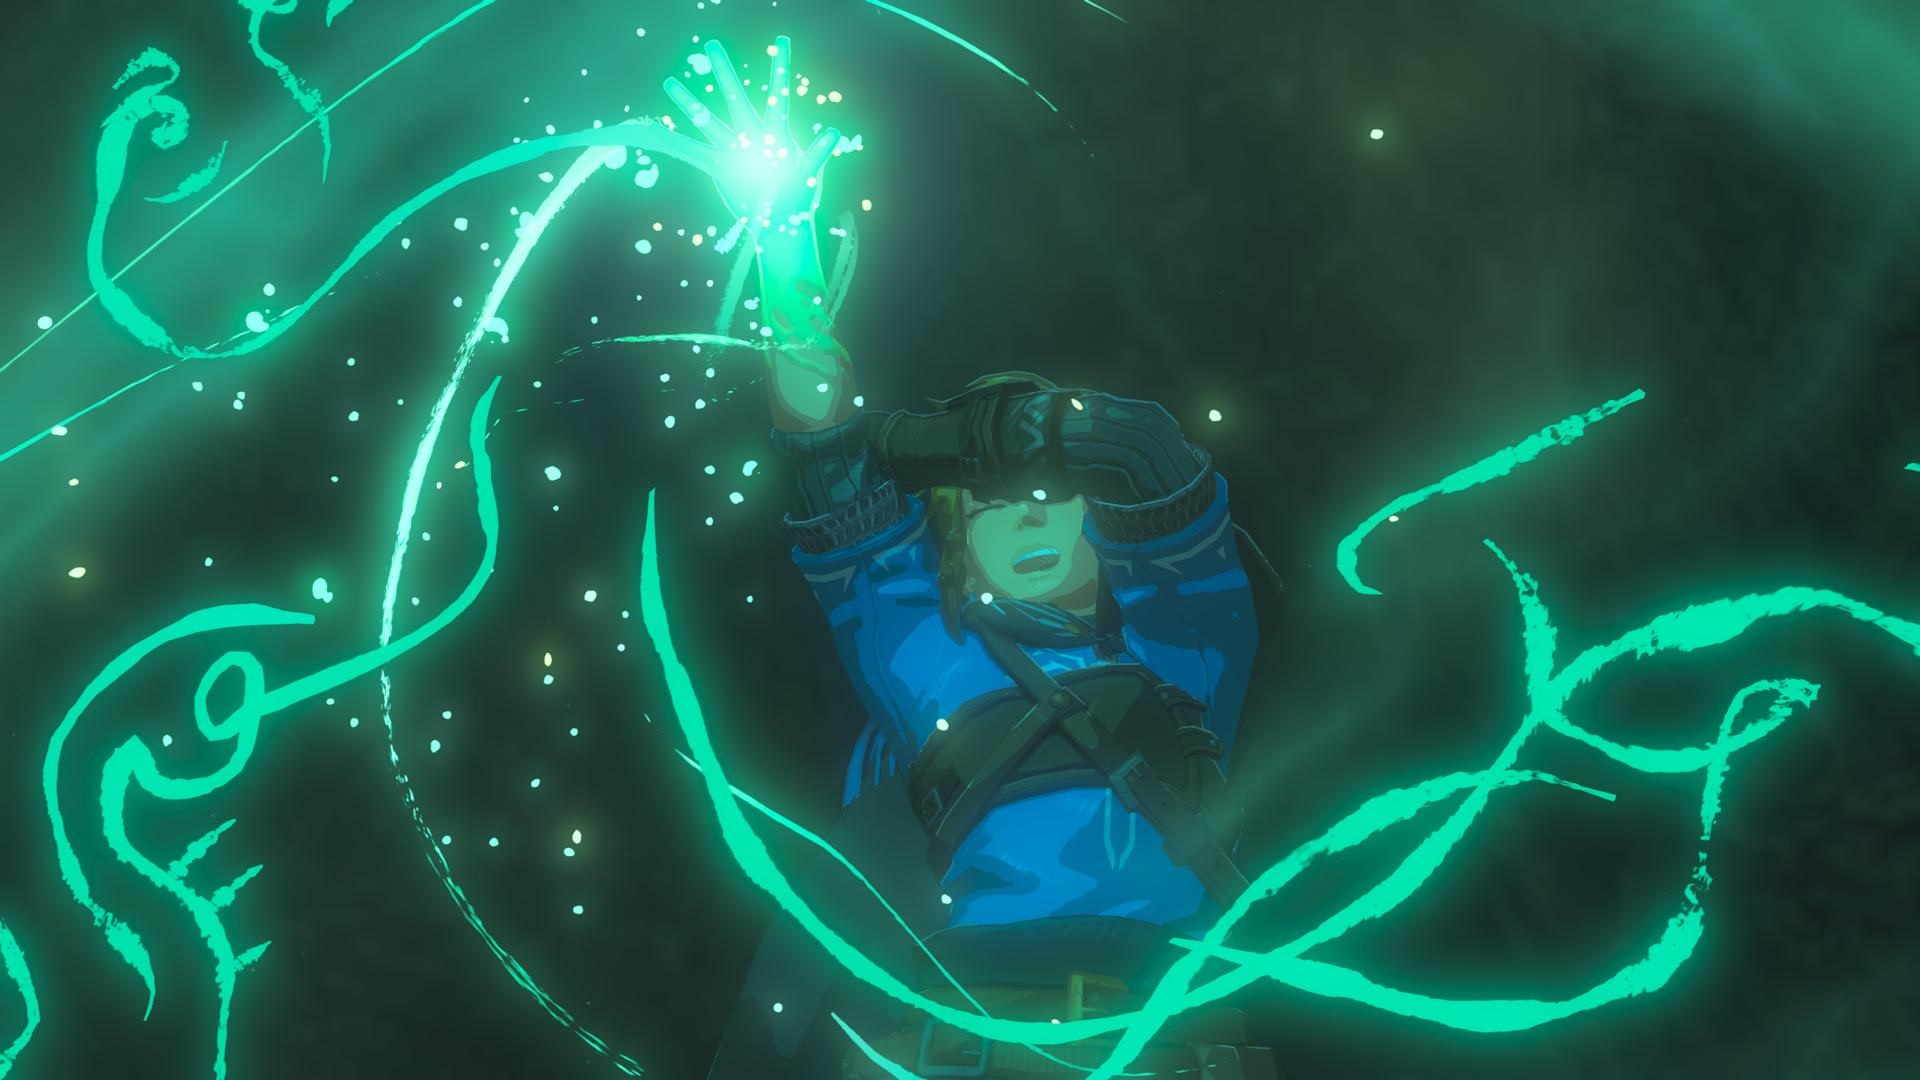 Nintendo Shares Zelda Breath Of The Wild 2 Behind The Scenes Trailer Images Vgc